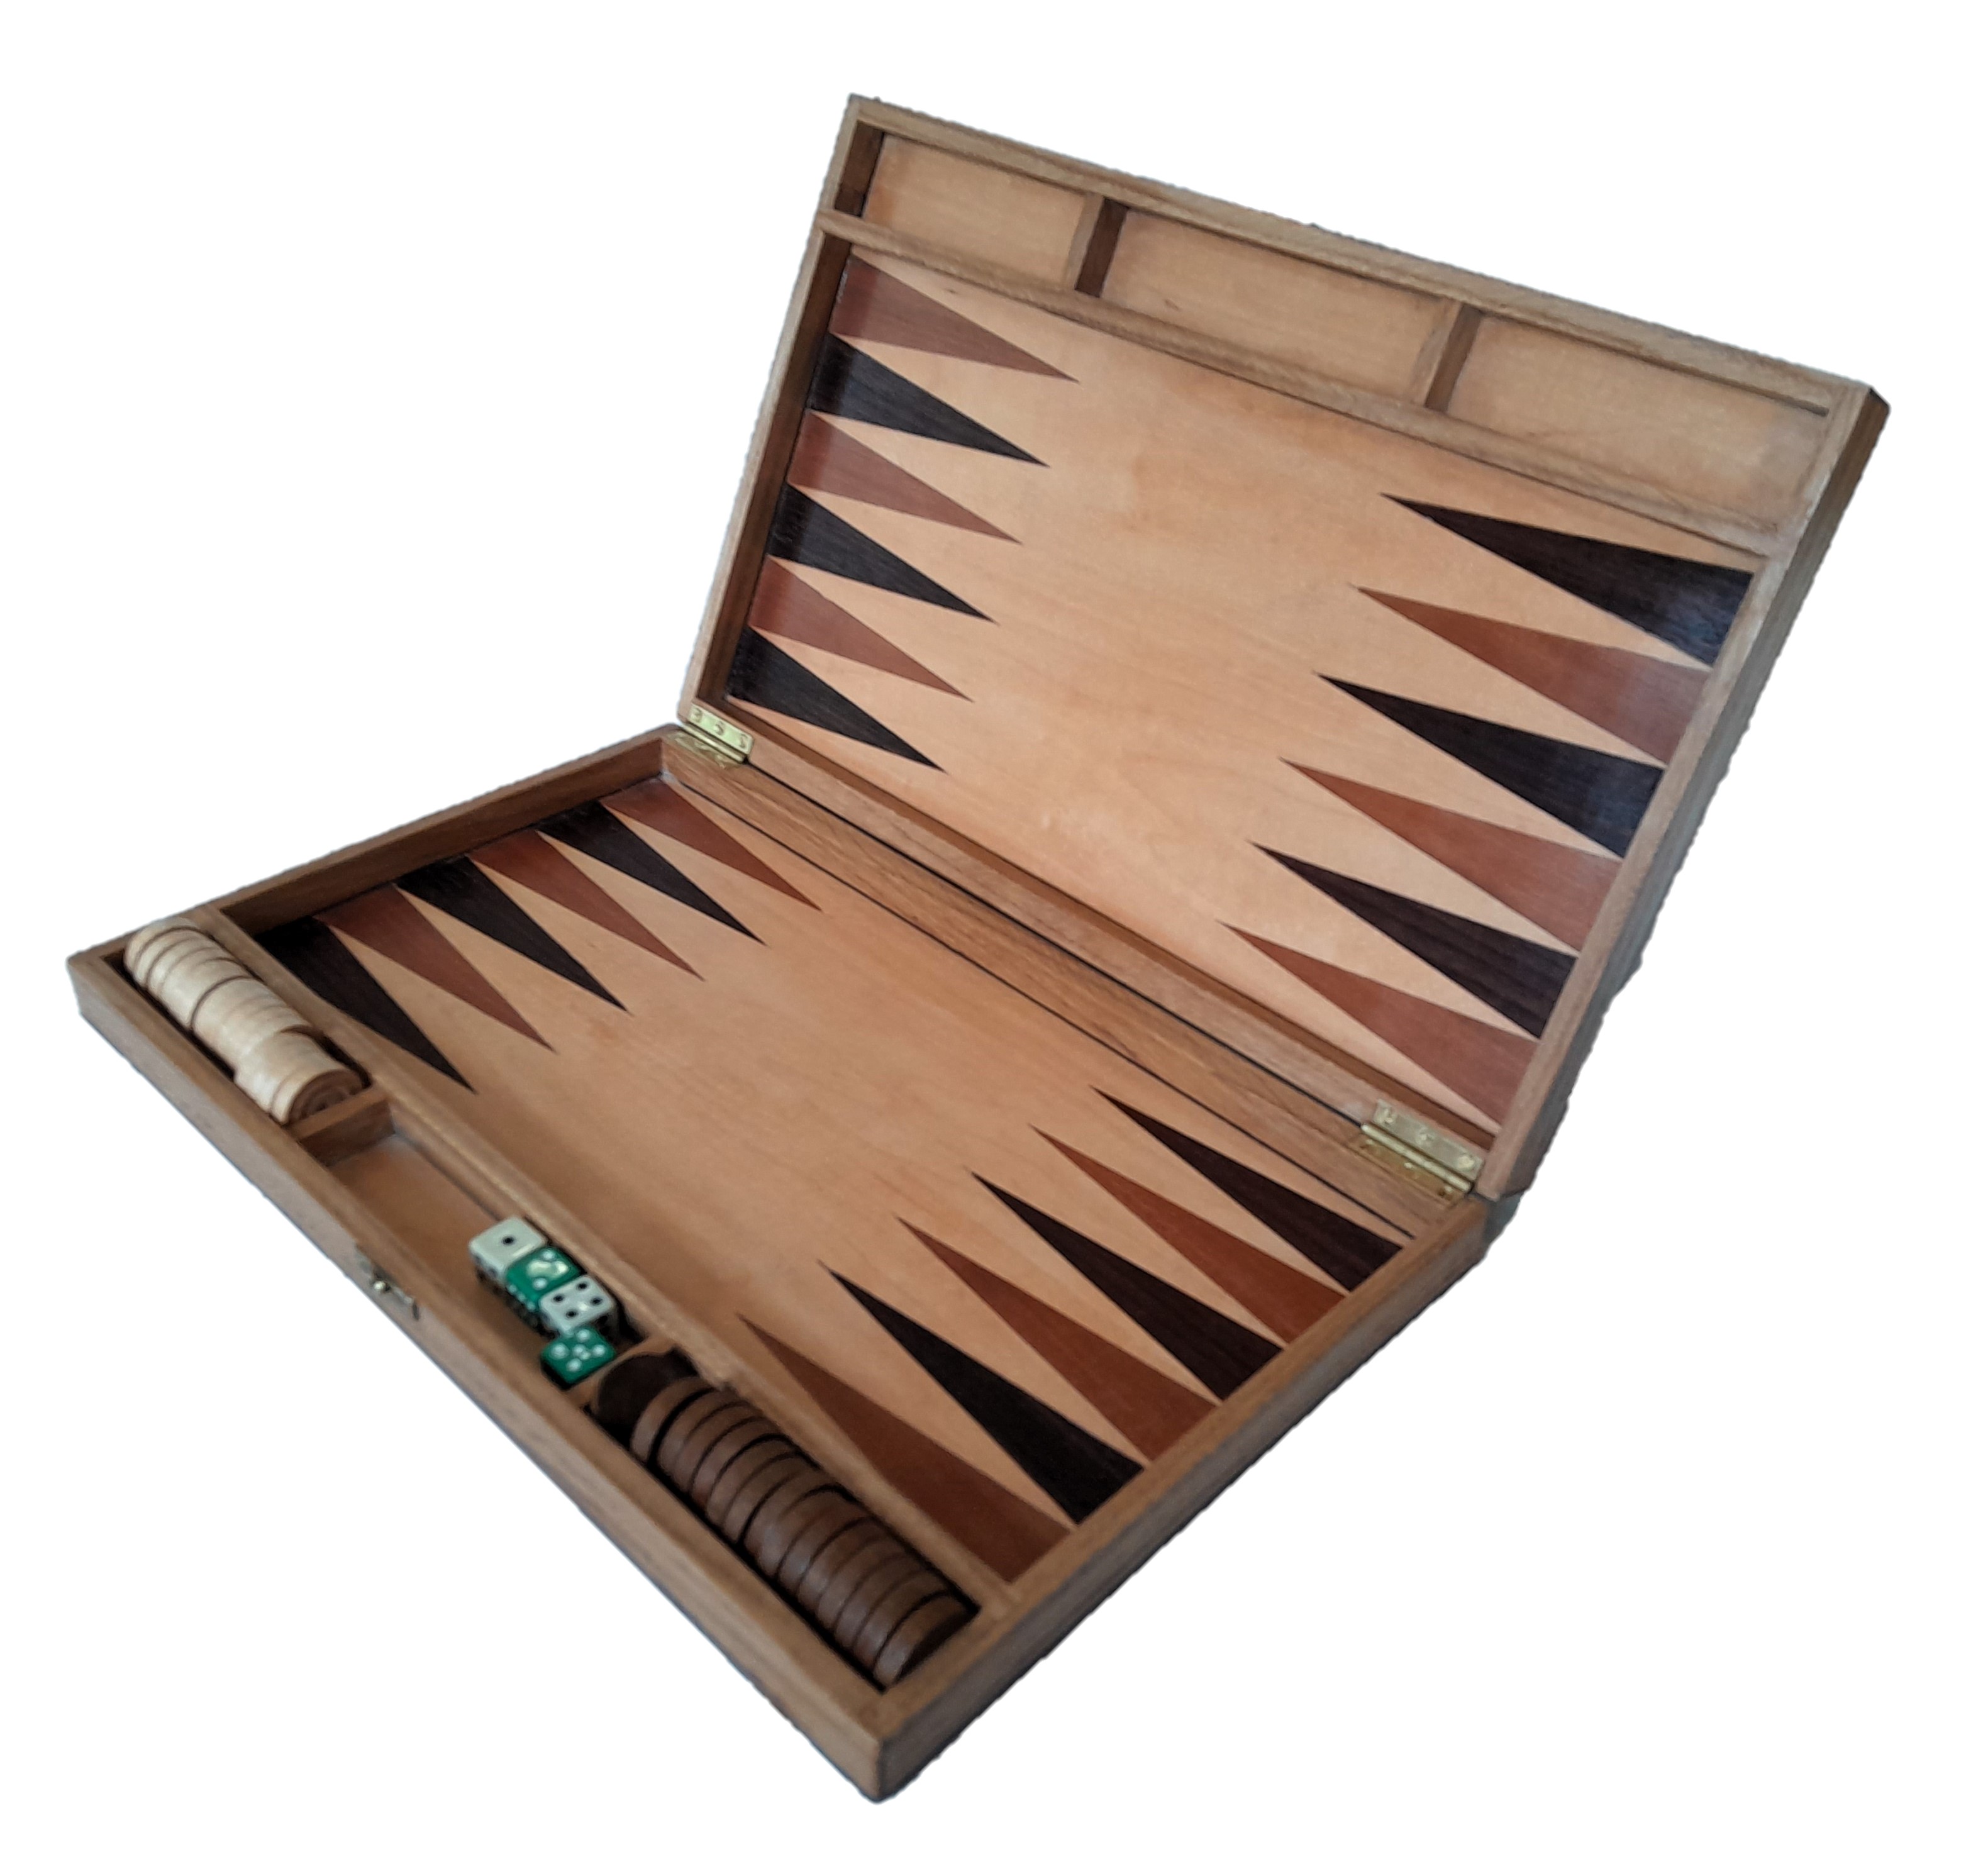 Backgammon Board 1683 - Click for details